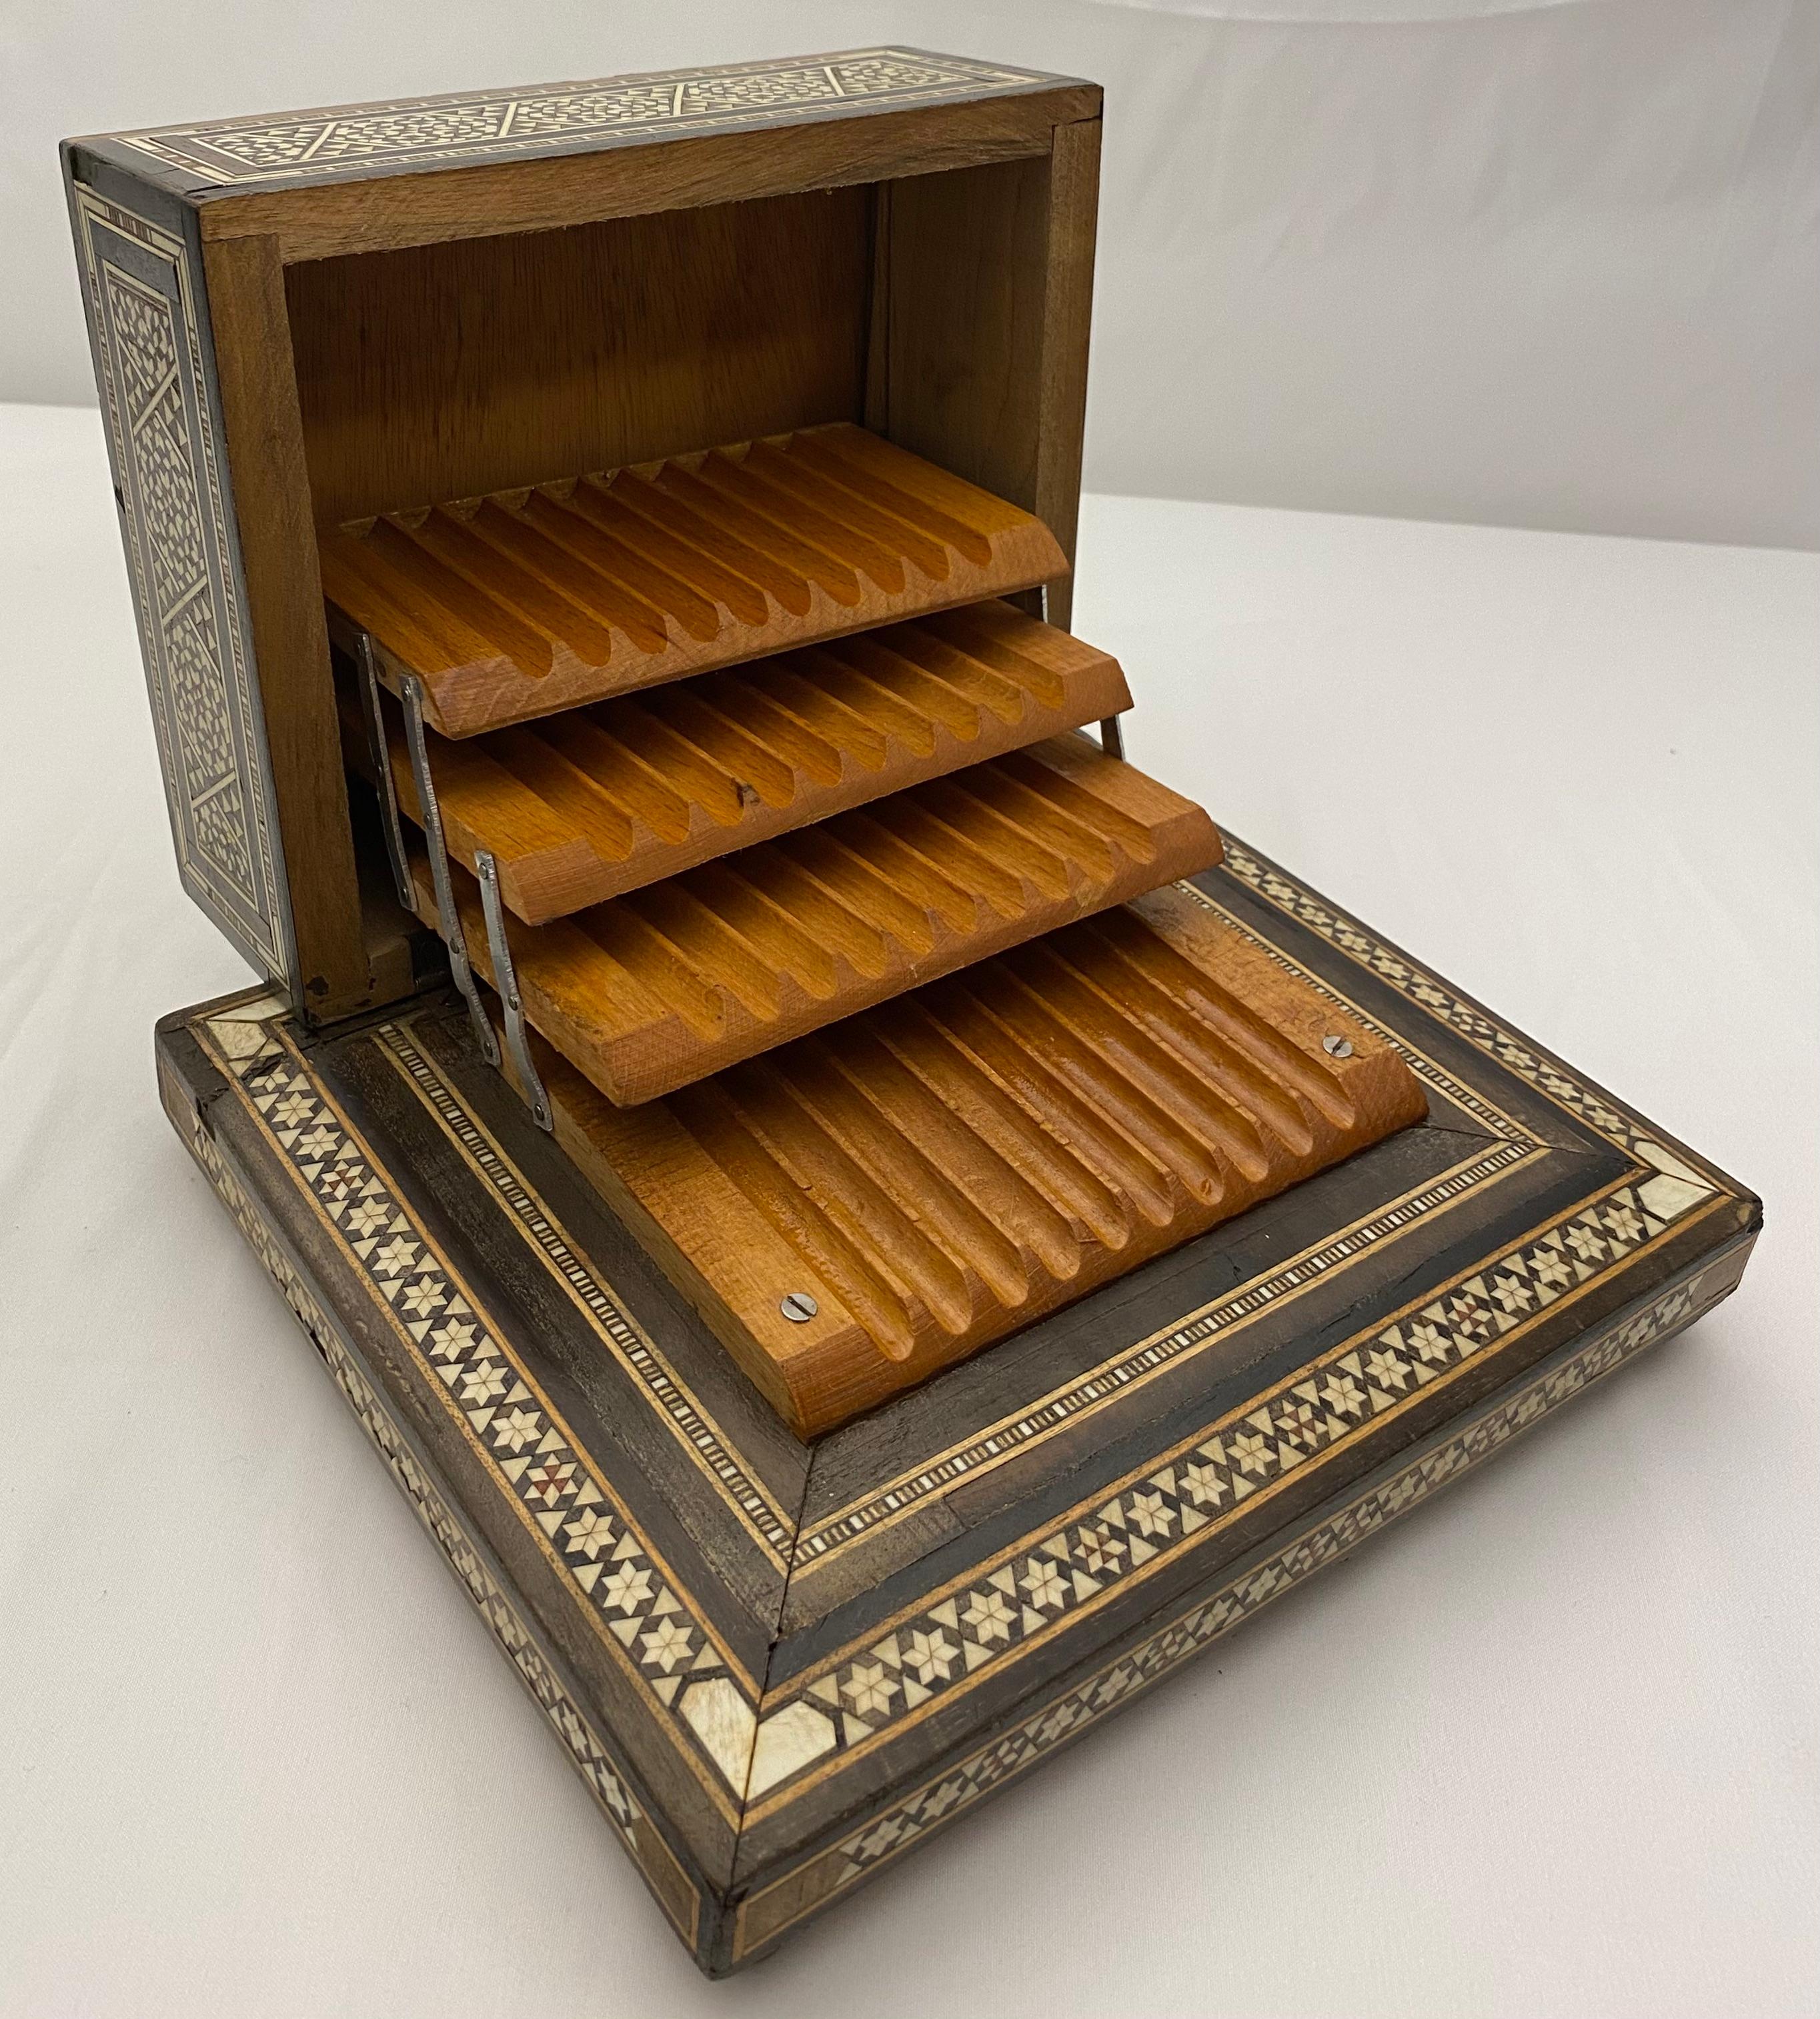 Moroccan Moorish Style Mother-of-Pearl Inlaid Art Deco Cigarette Box For Sale